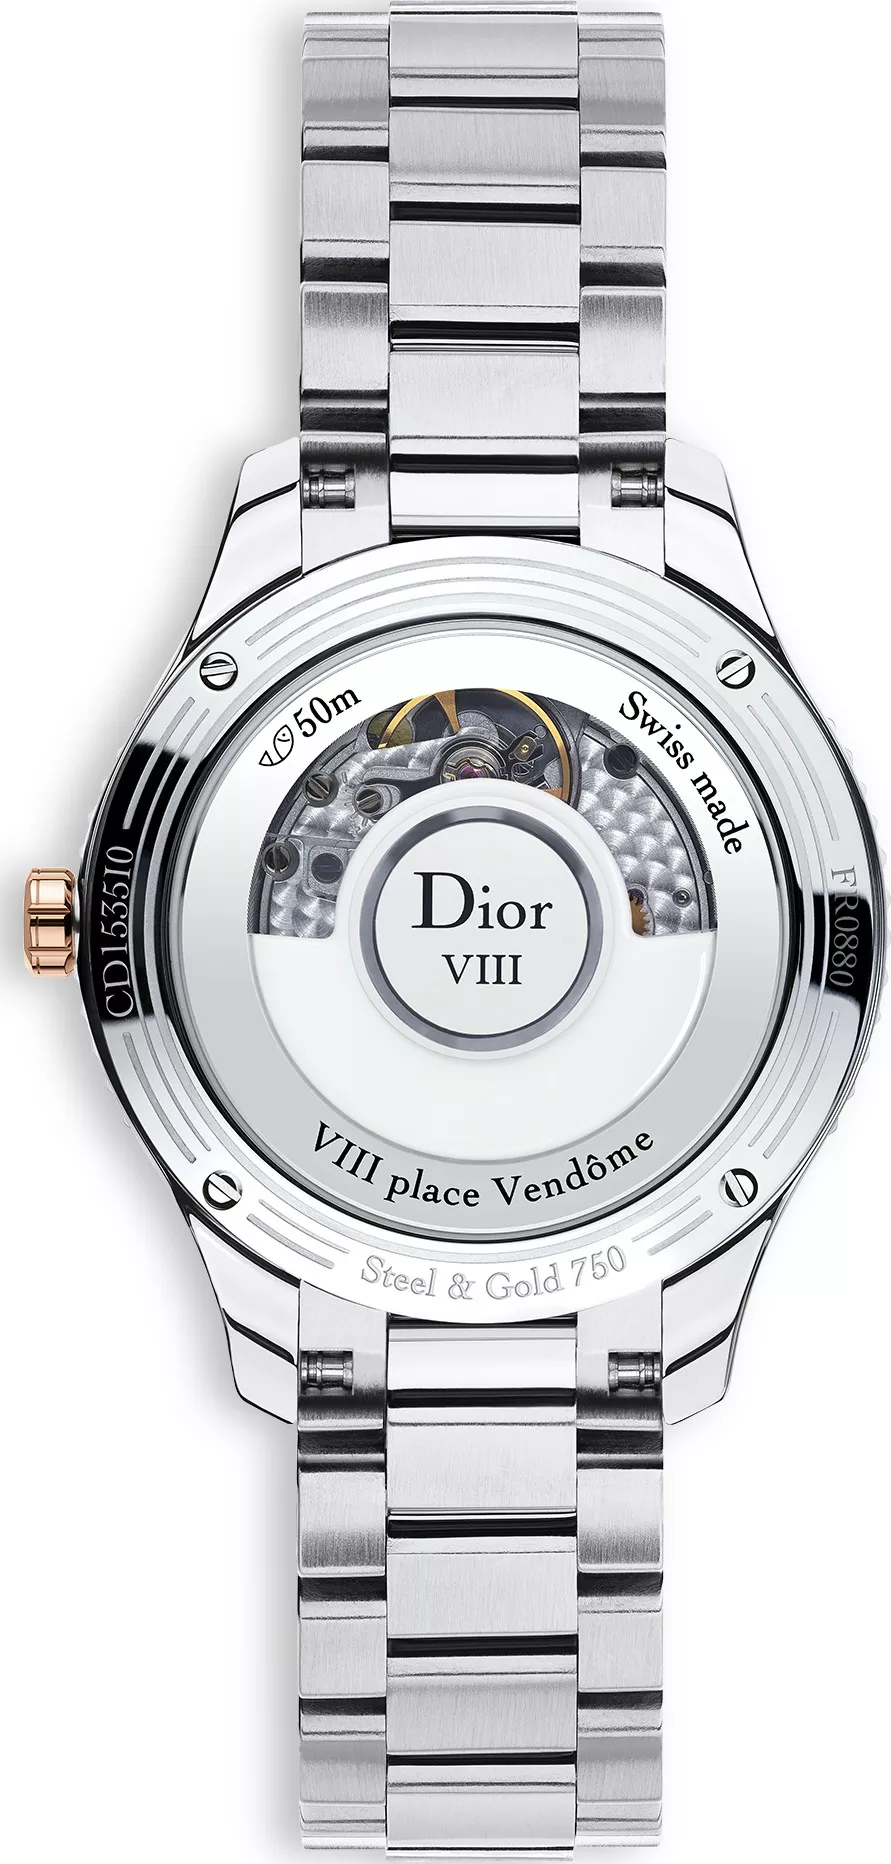 Christian Dior Dior VIII CD1535I0M001 Pink Gold 36